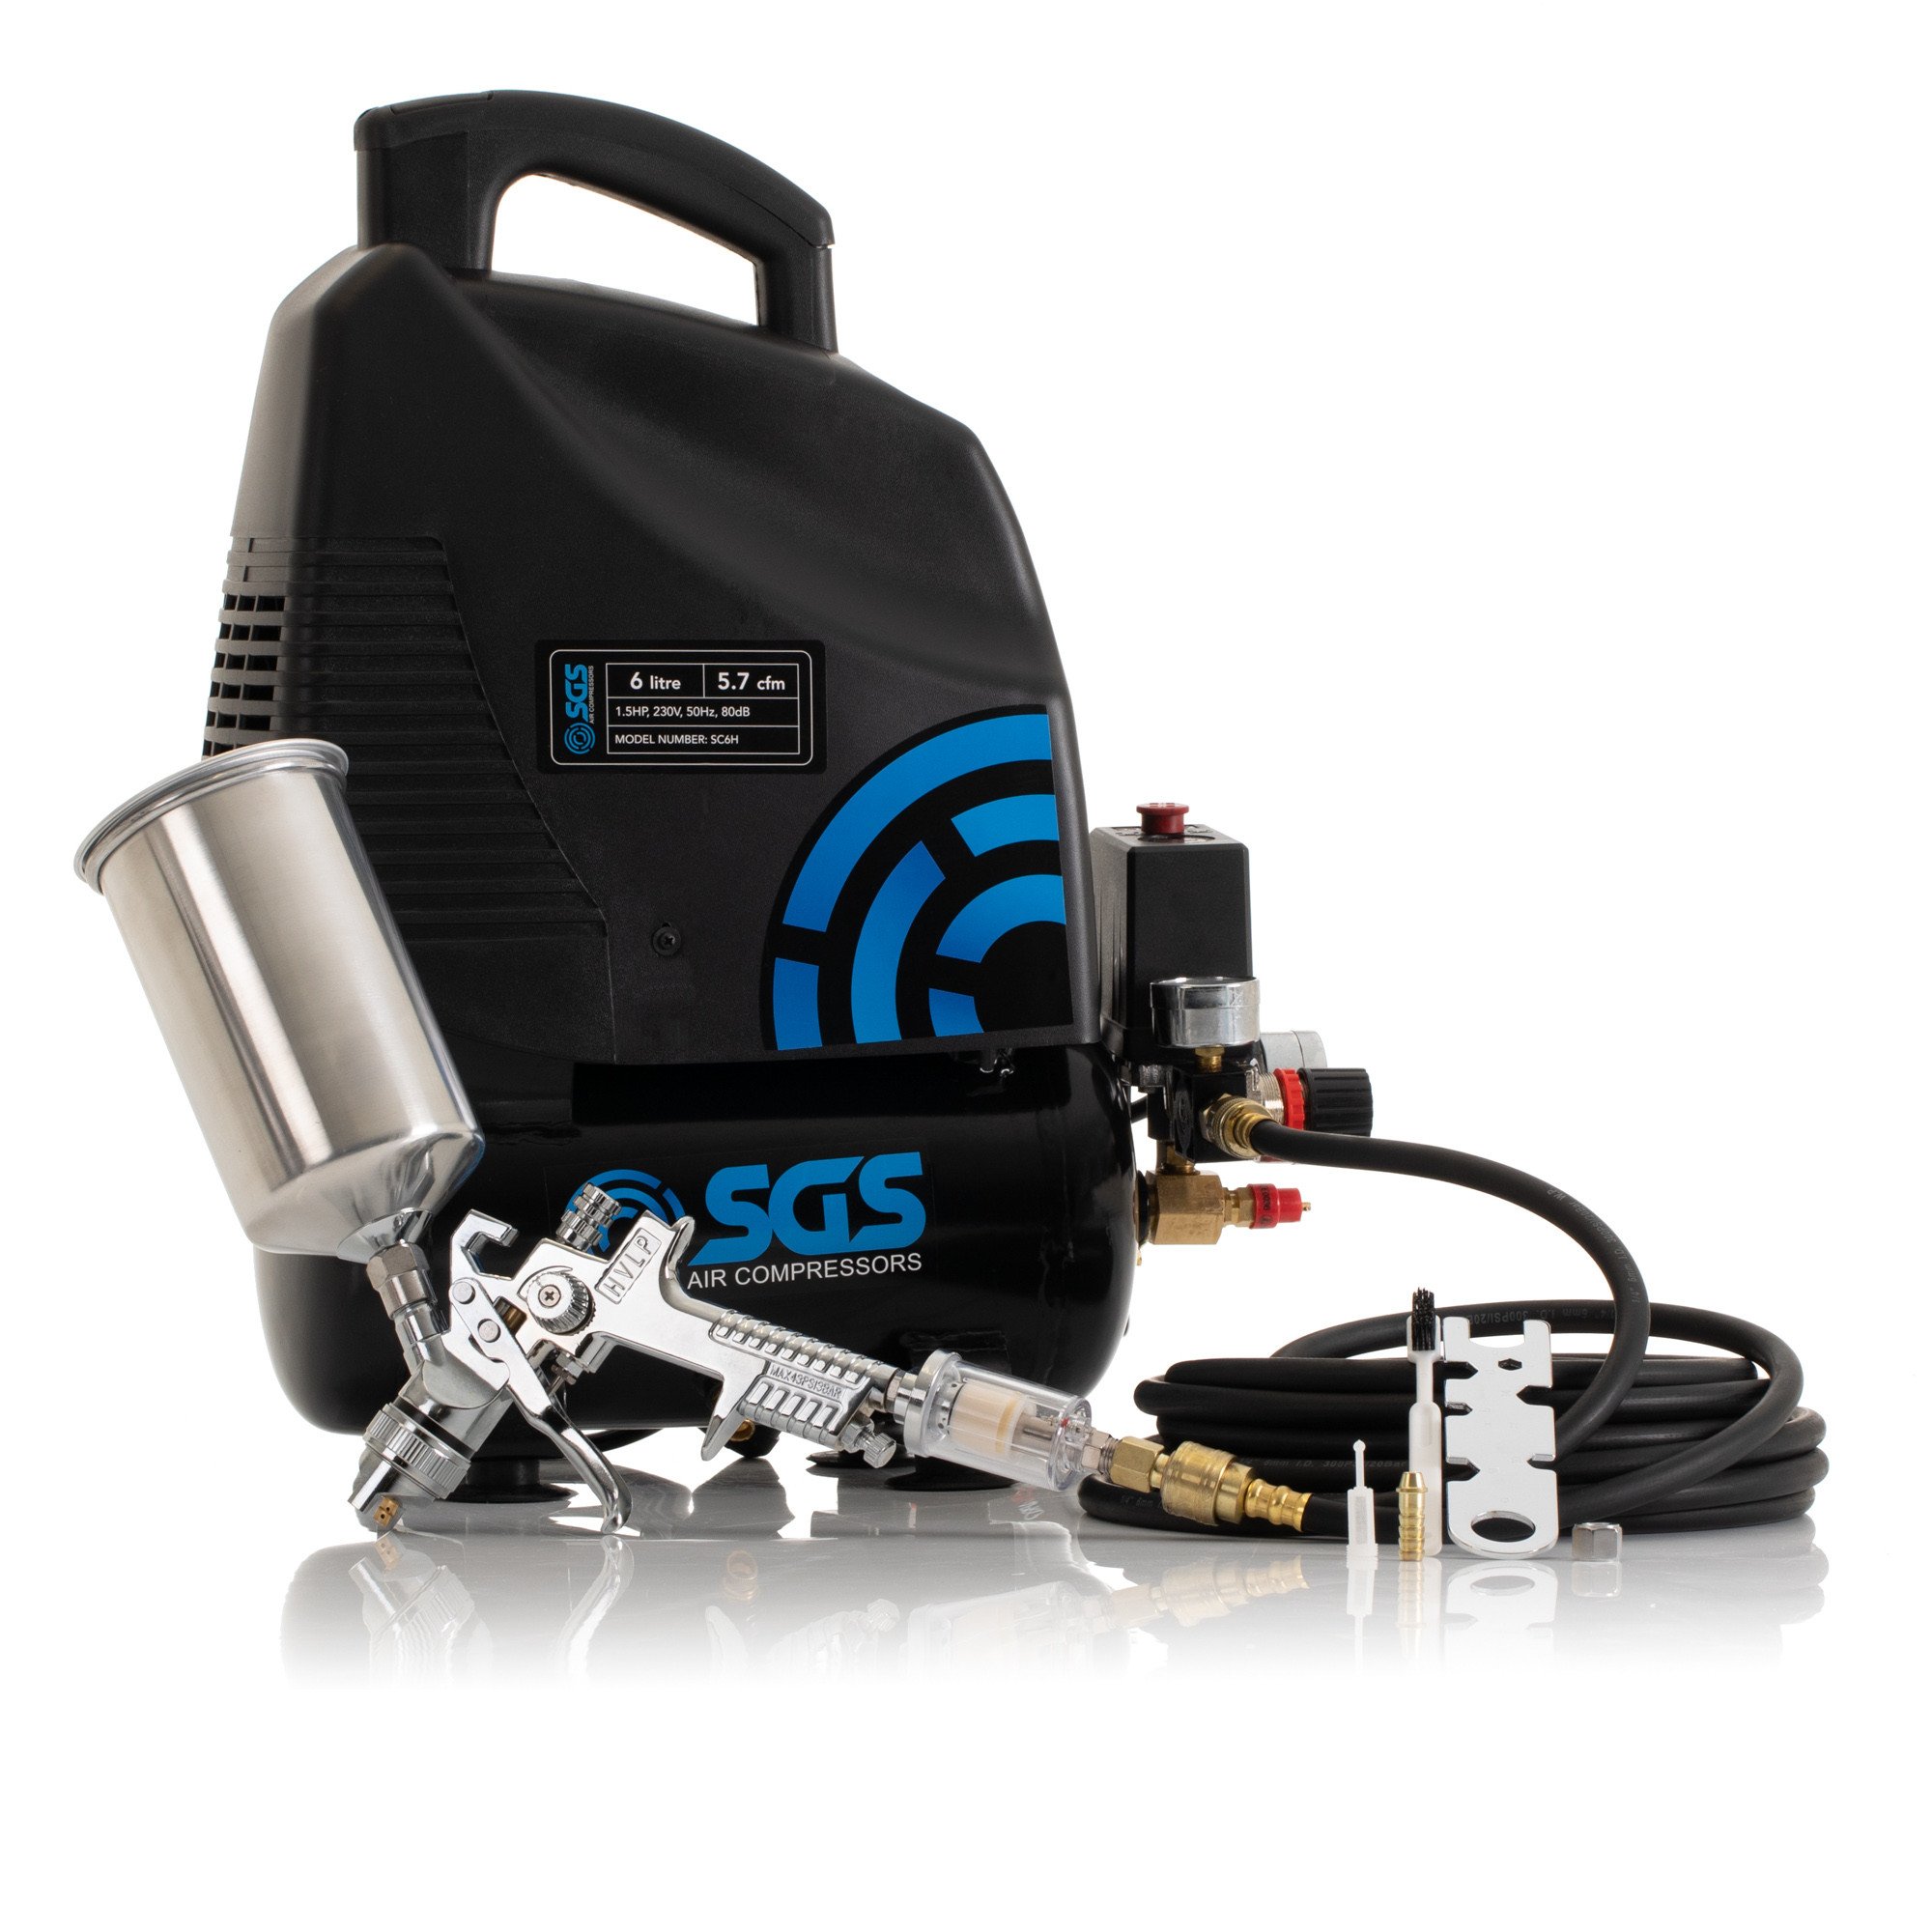 SGS 6 Litre Oil-Less Direct Drive Air Compressor & Spray Gun Kit - 5.7CFM, 1.5HP